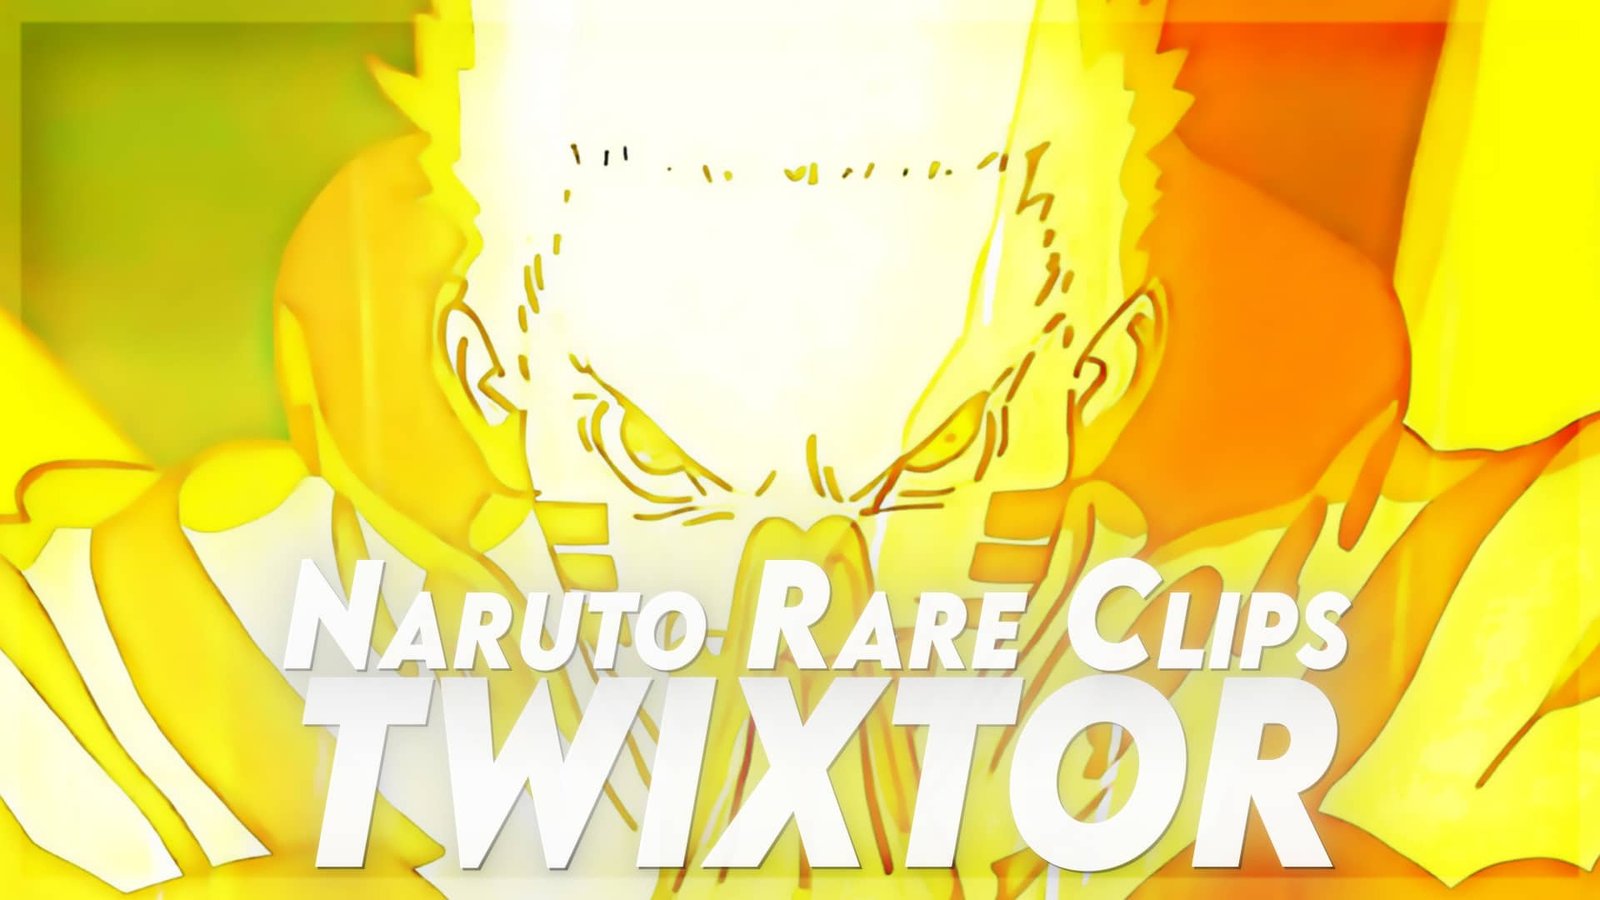 Naruto Rare Clips Part 1 Twixtor